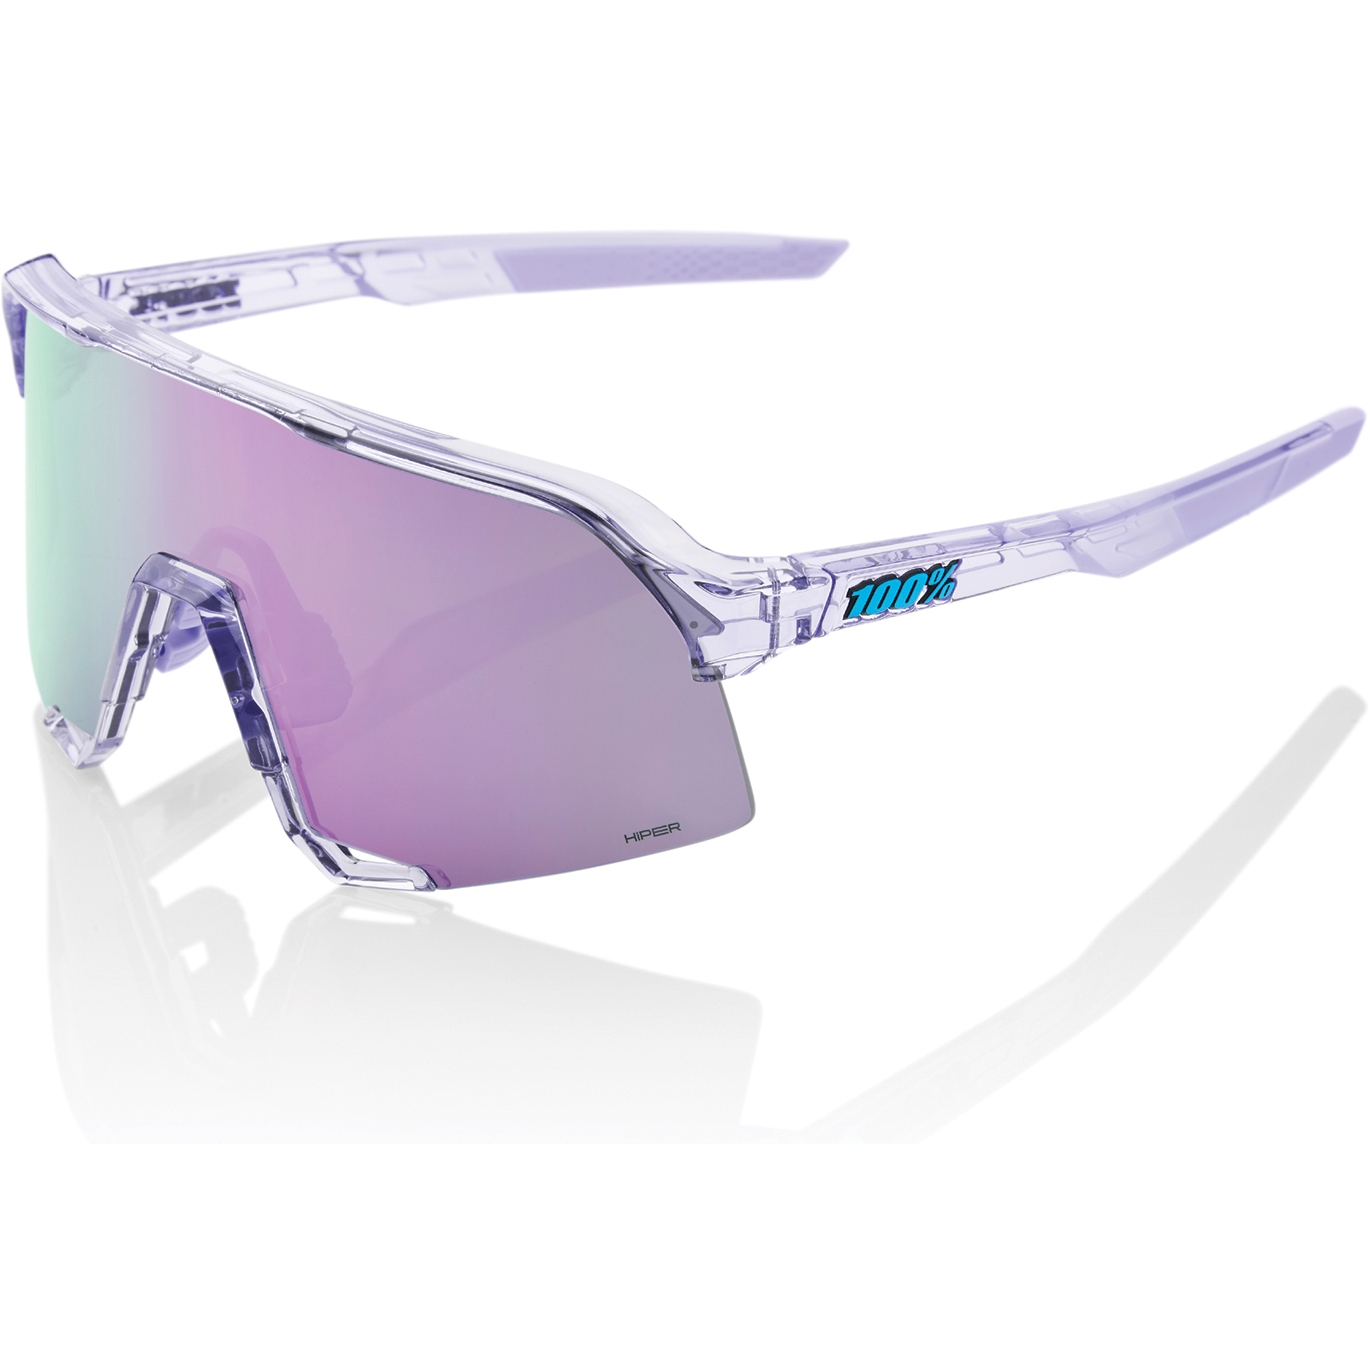 Produktbild von 100% S3 Brille - HiPER Mirror Lens - Polished Translucent Lavender / Lavender + Clear